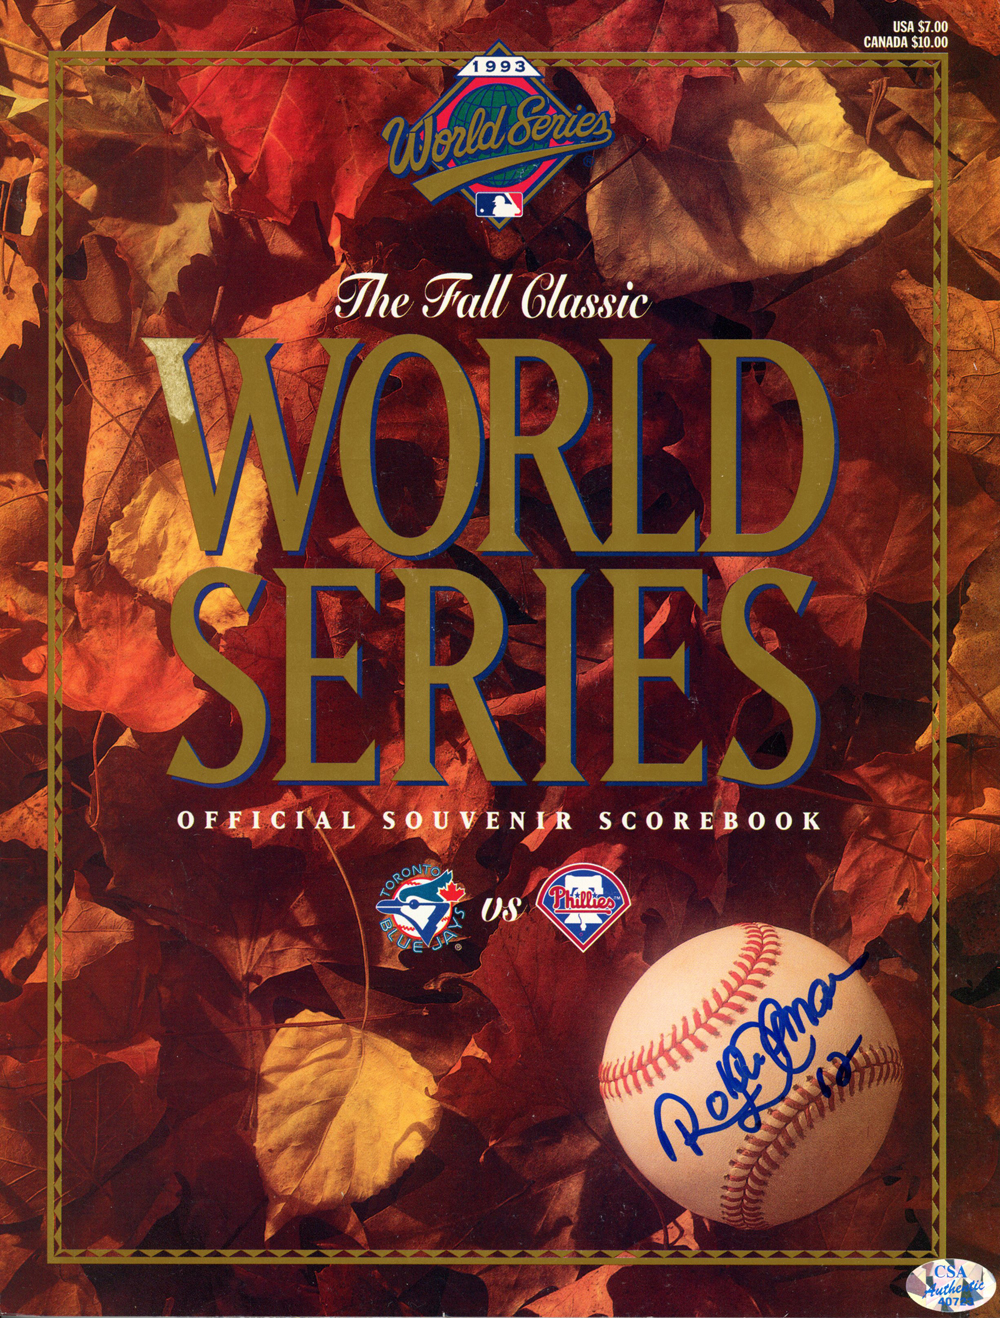 Roberto Alomar Autographed 1993 World Series Scorebook Program Beckett